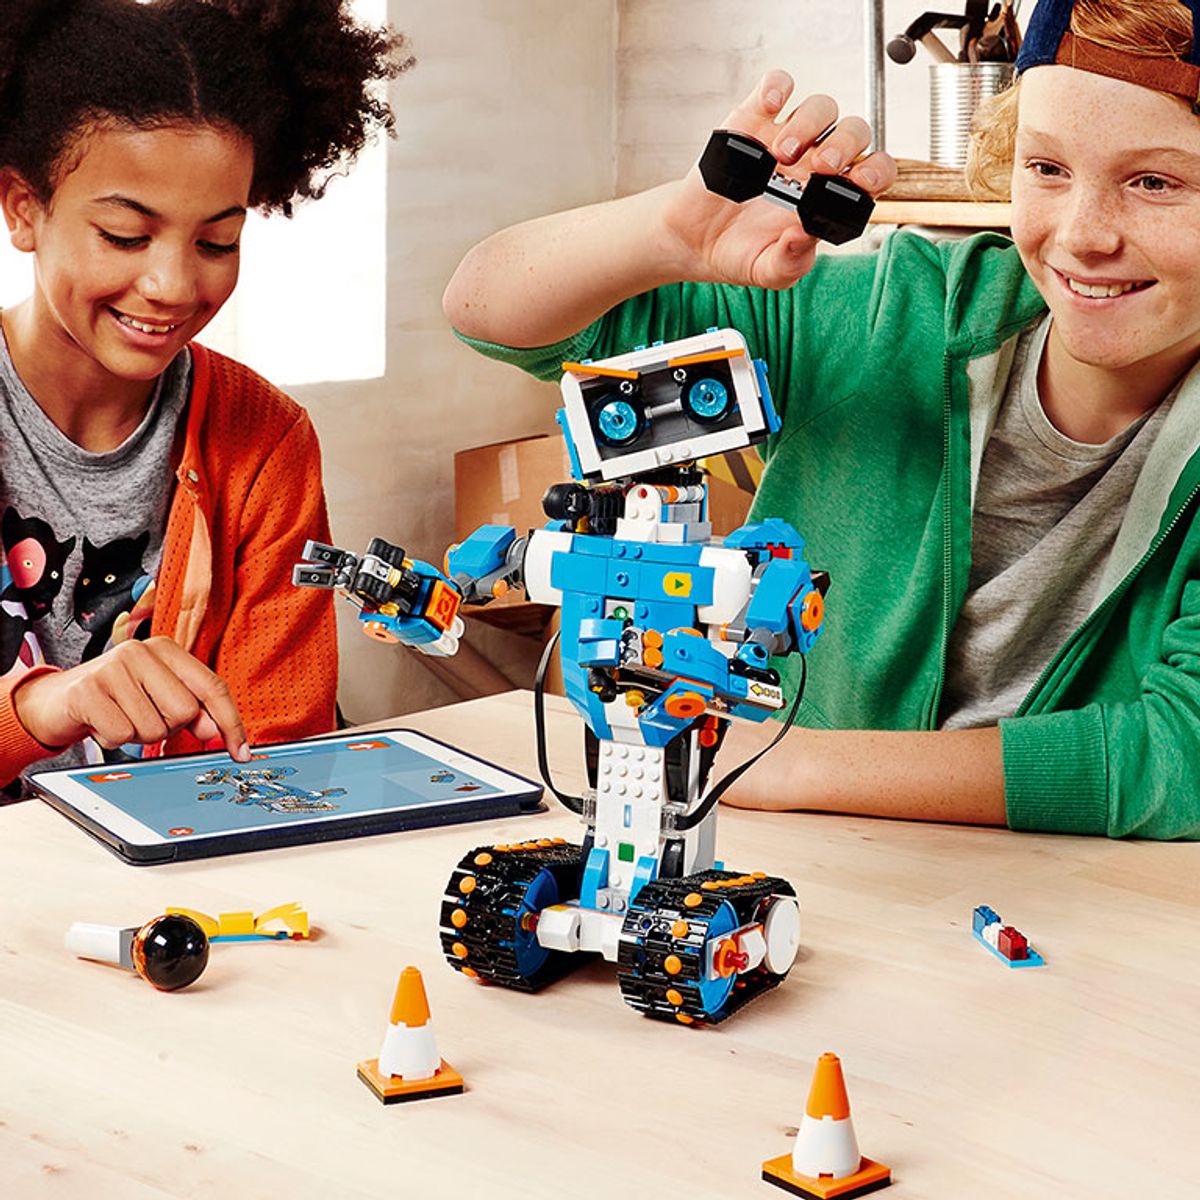 Robotics for Kids: Best Way to Learn Robotics (Ages 6-18)